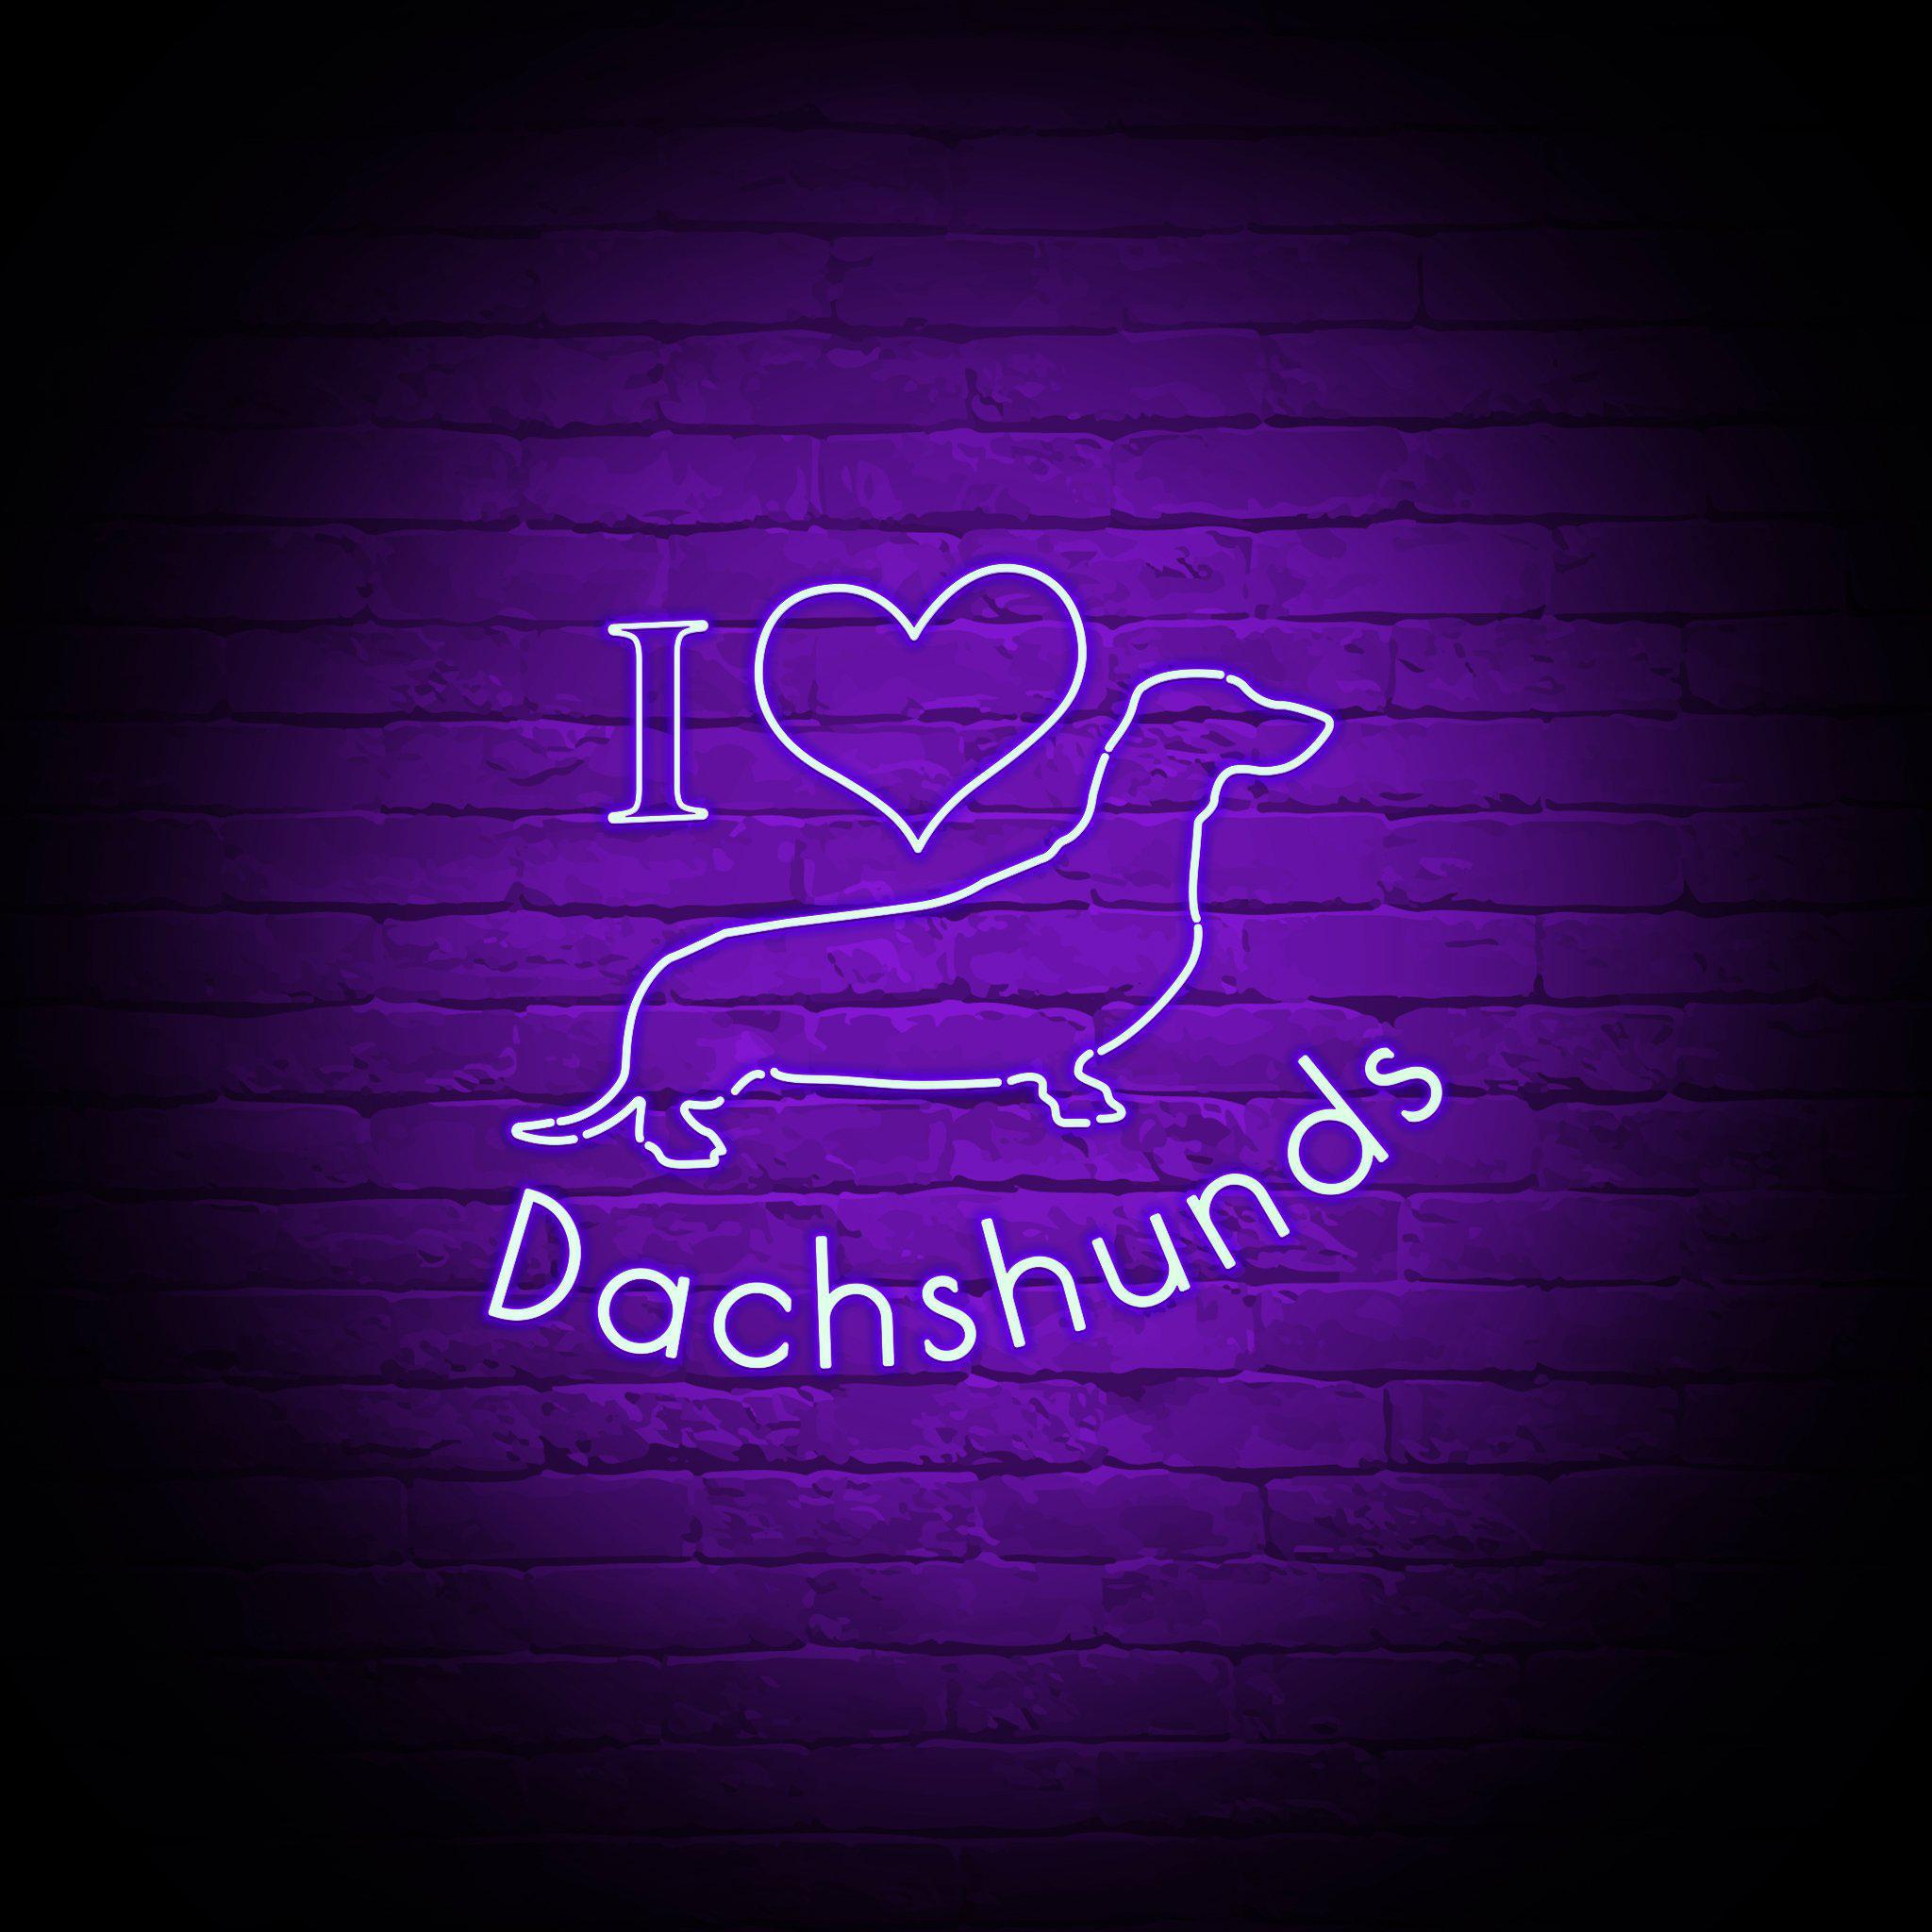 'I LOVE DACHSHUNDS' NEON SIGN